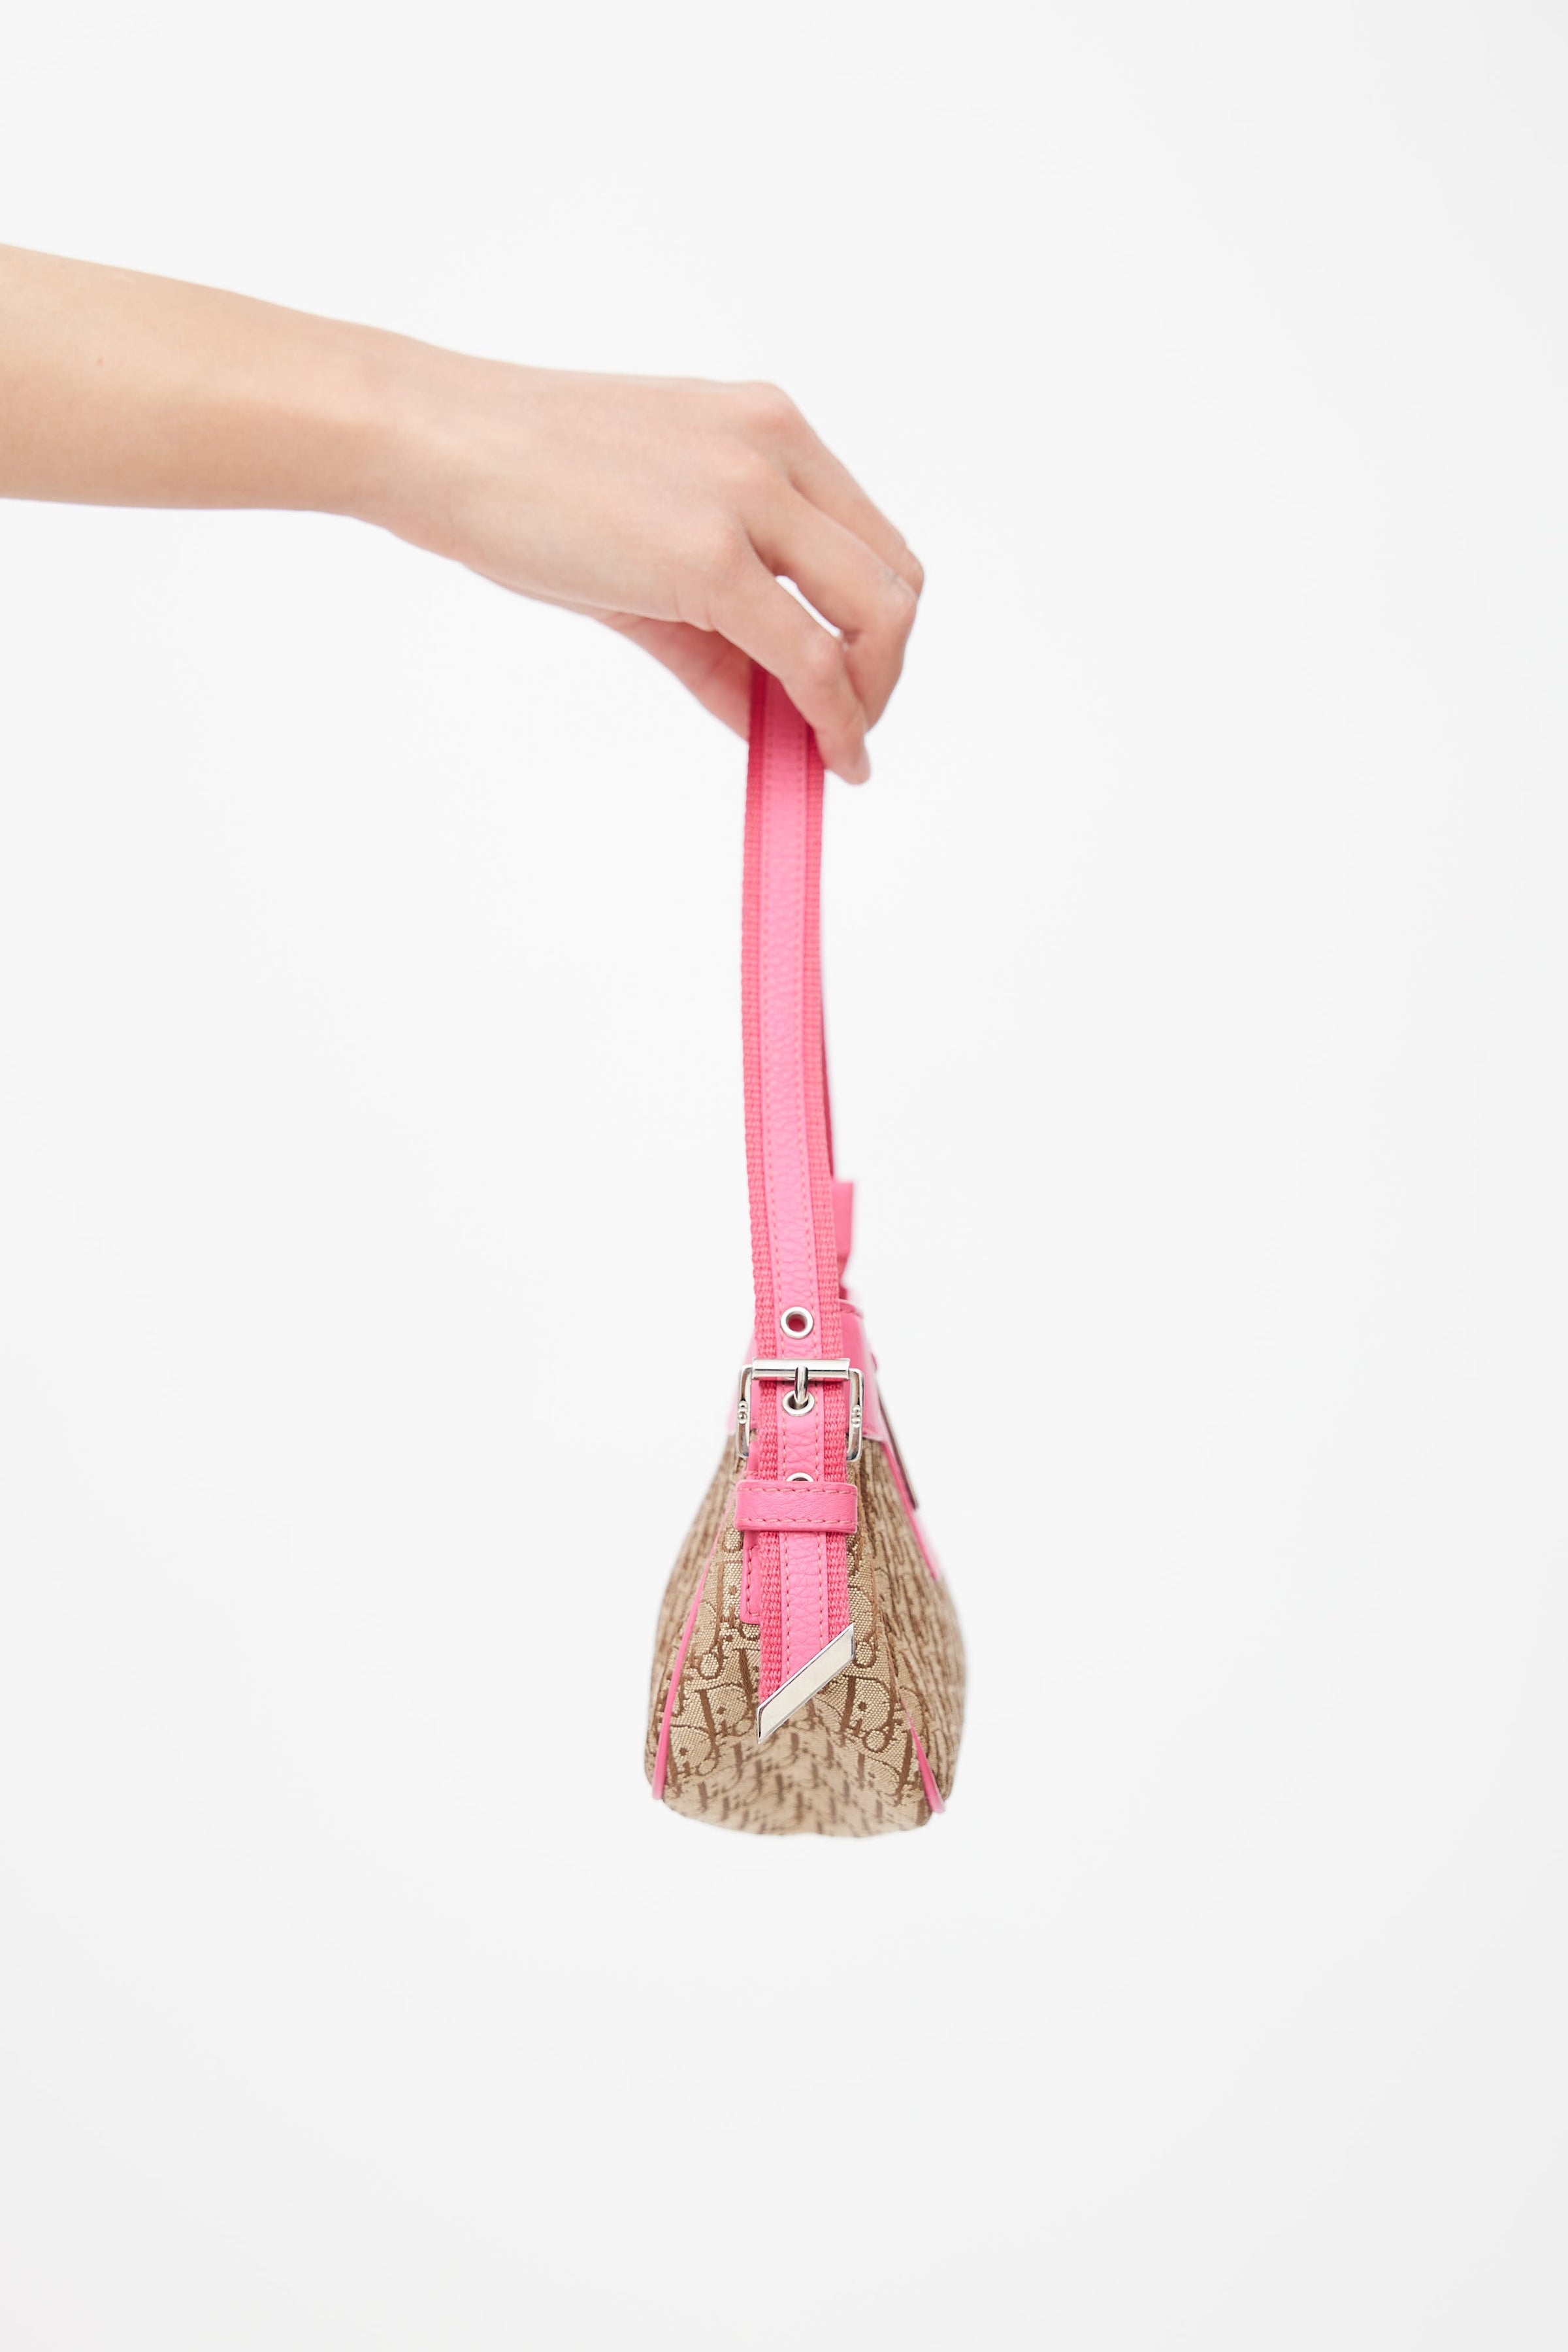 Dior // 2005 Beige & Pink Diorissimo Pochette Bag – VSP Consignment